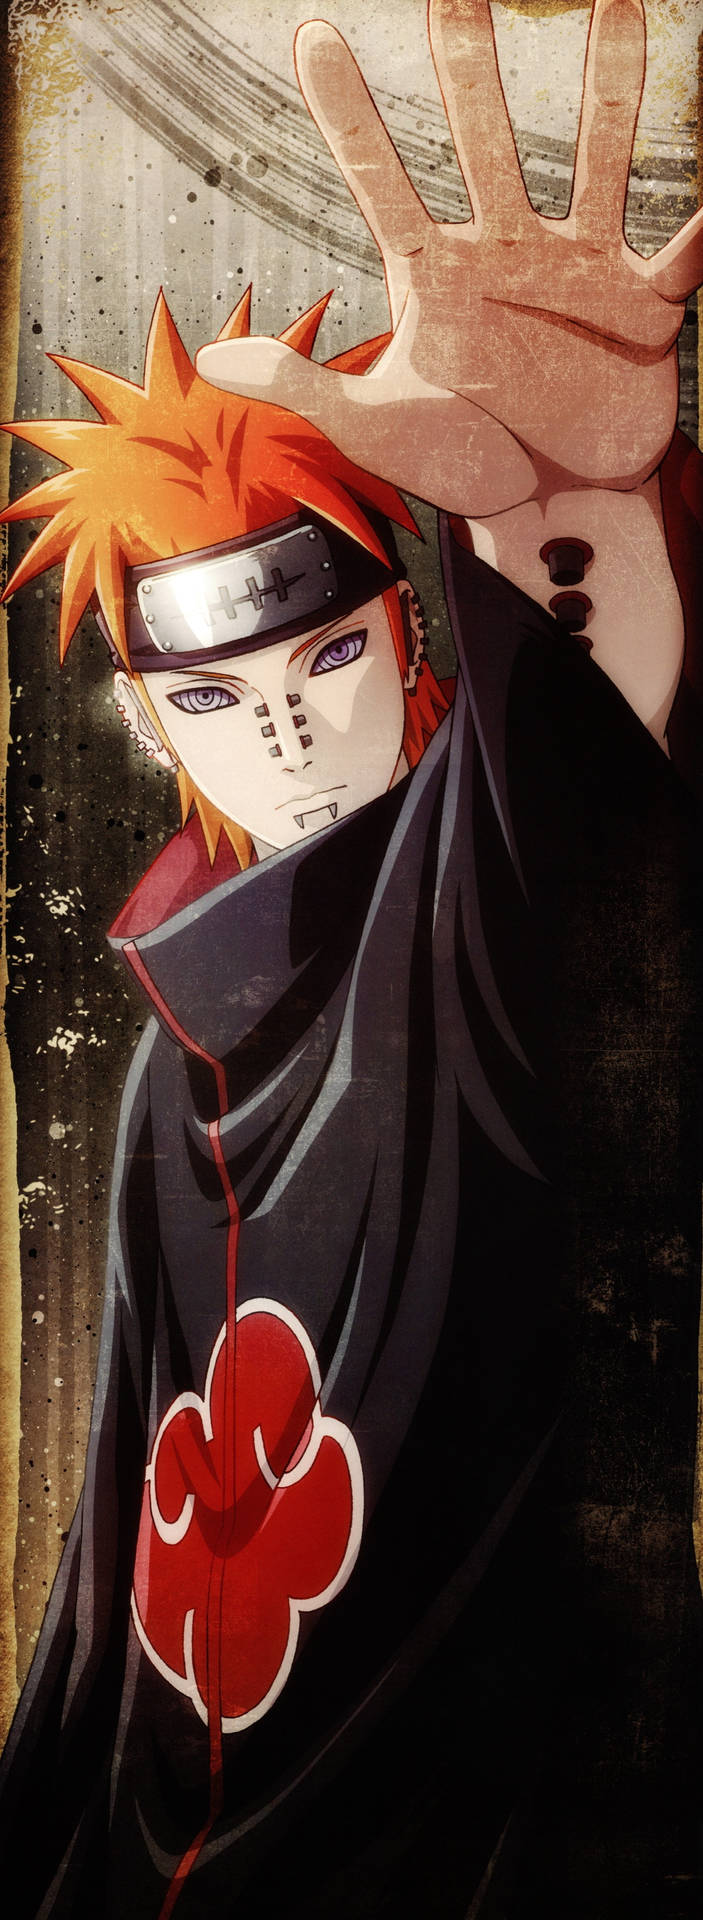 Nagatofrån Anime-serien Naruto - Mobilbakgrund I 4k Wallpaper